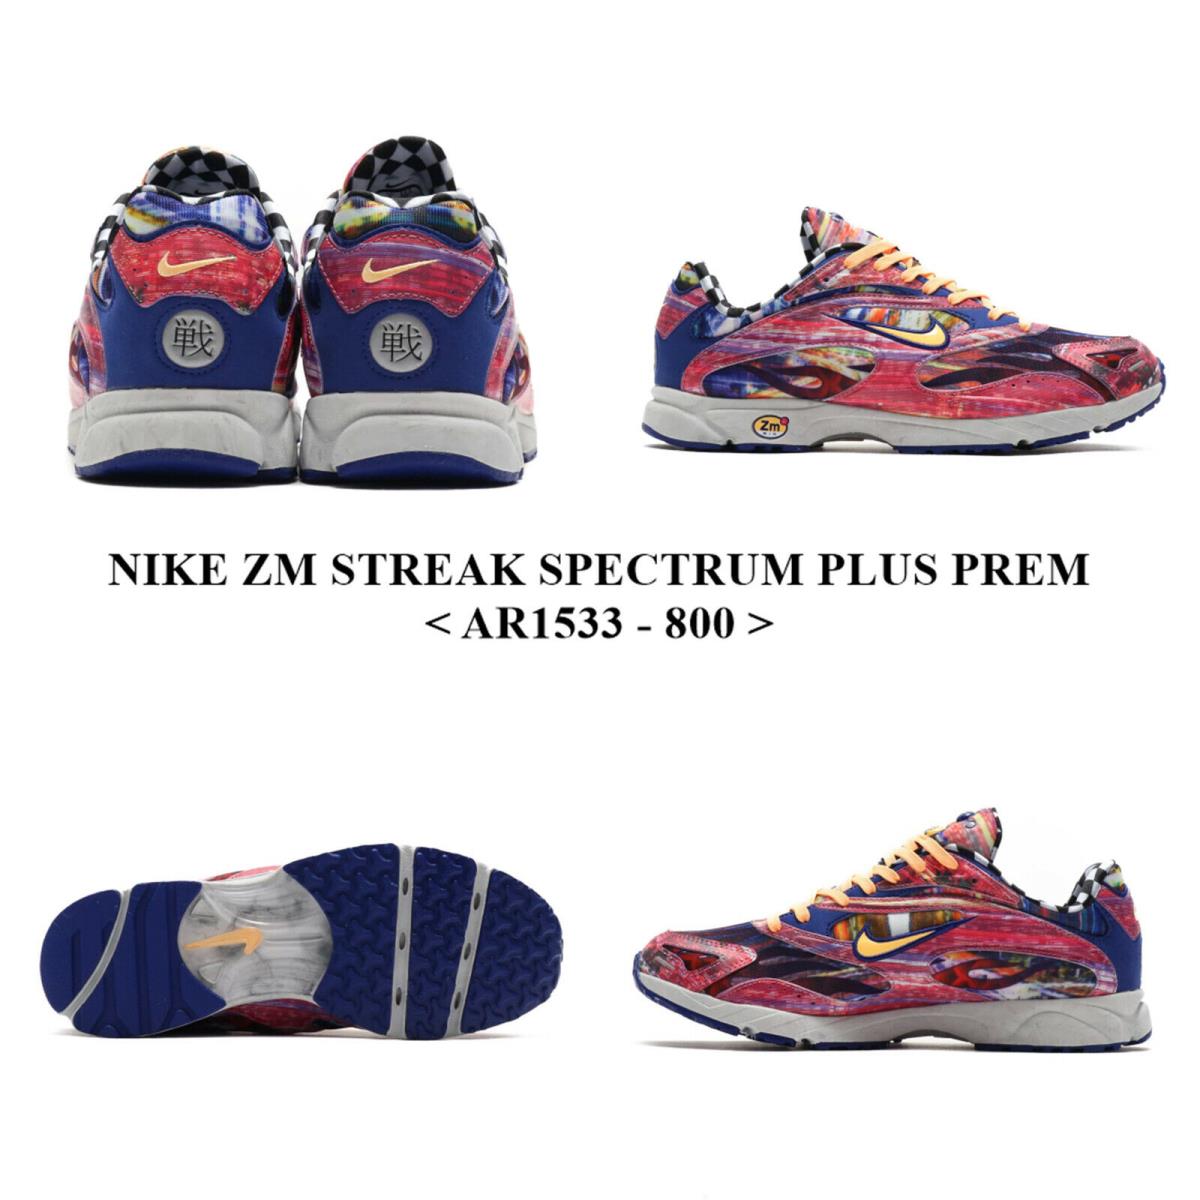 Nike ZM Streak Spectrum Plus Prem <AR1533 - 800> Men`s Running-sneaker Shoes